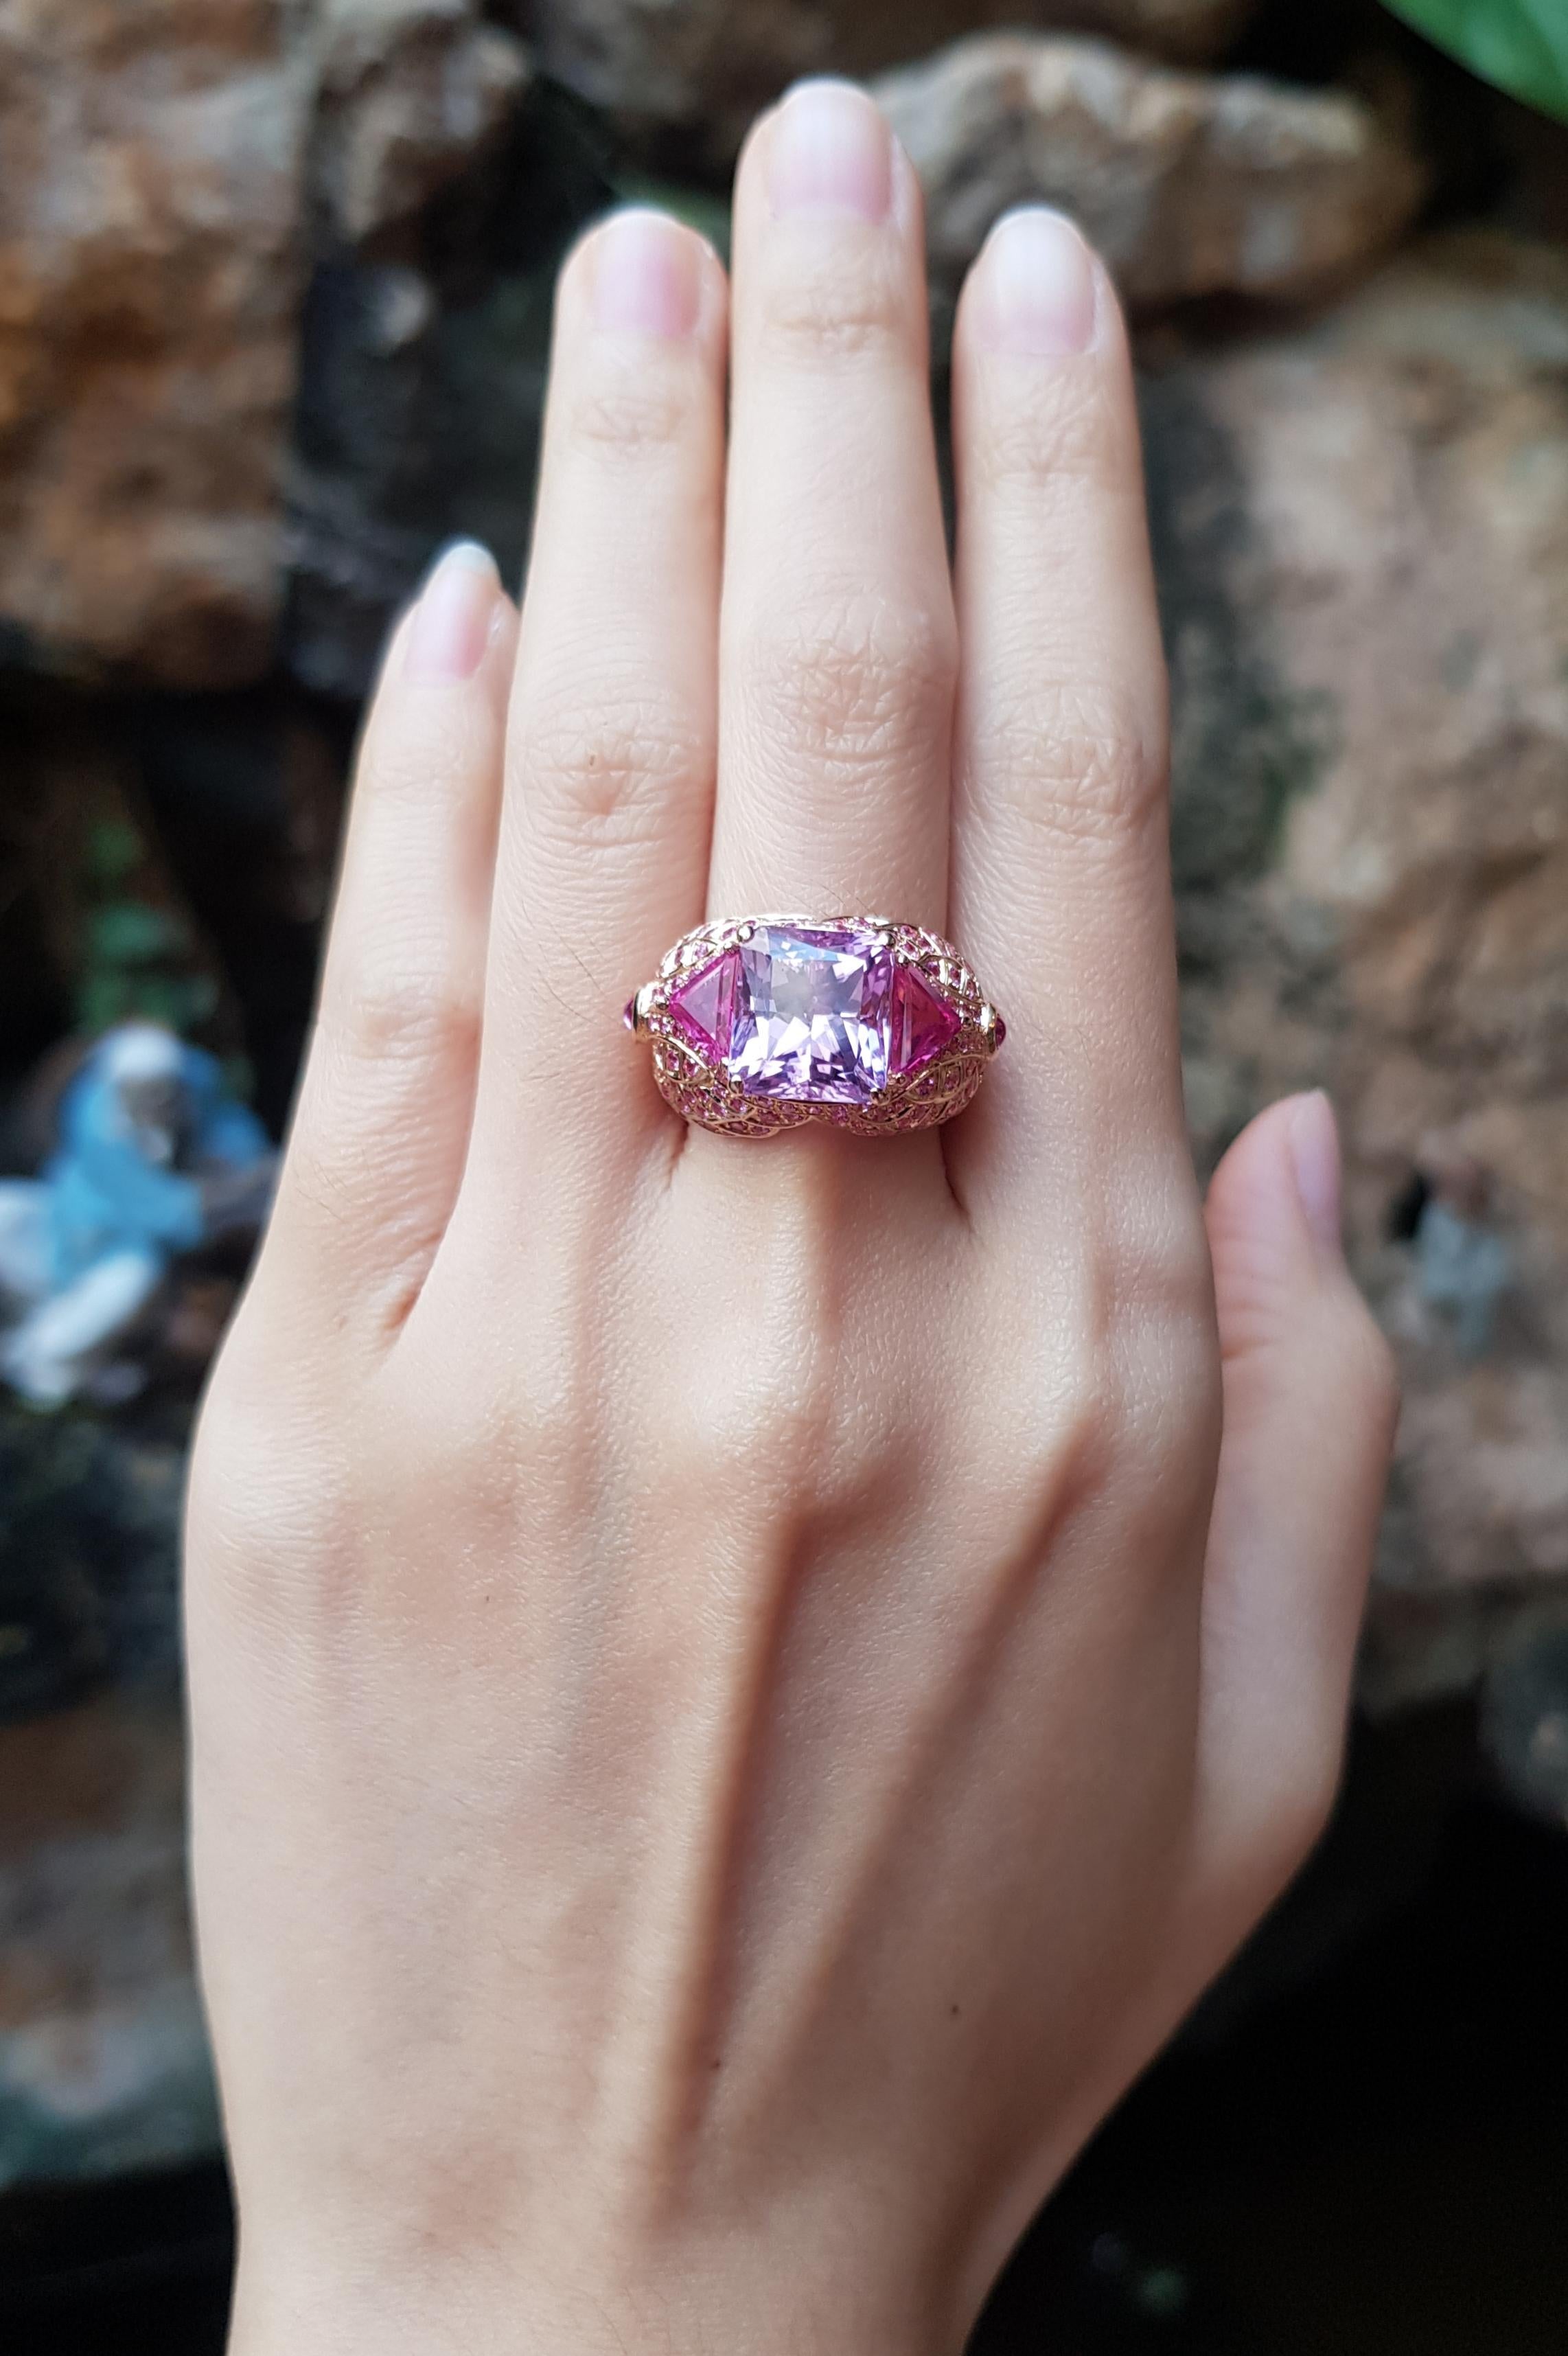 10 carat pink sapphire